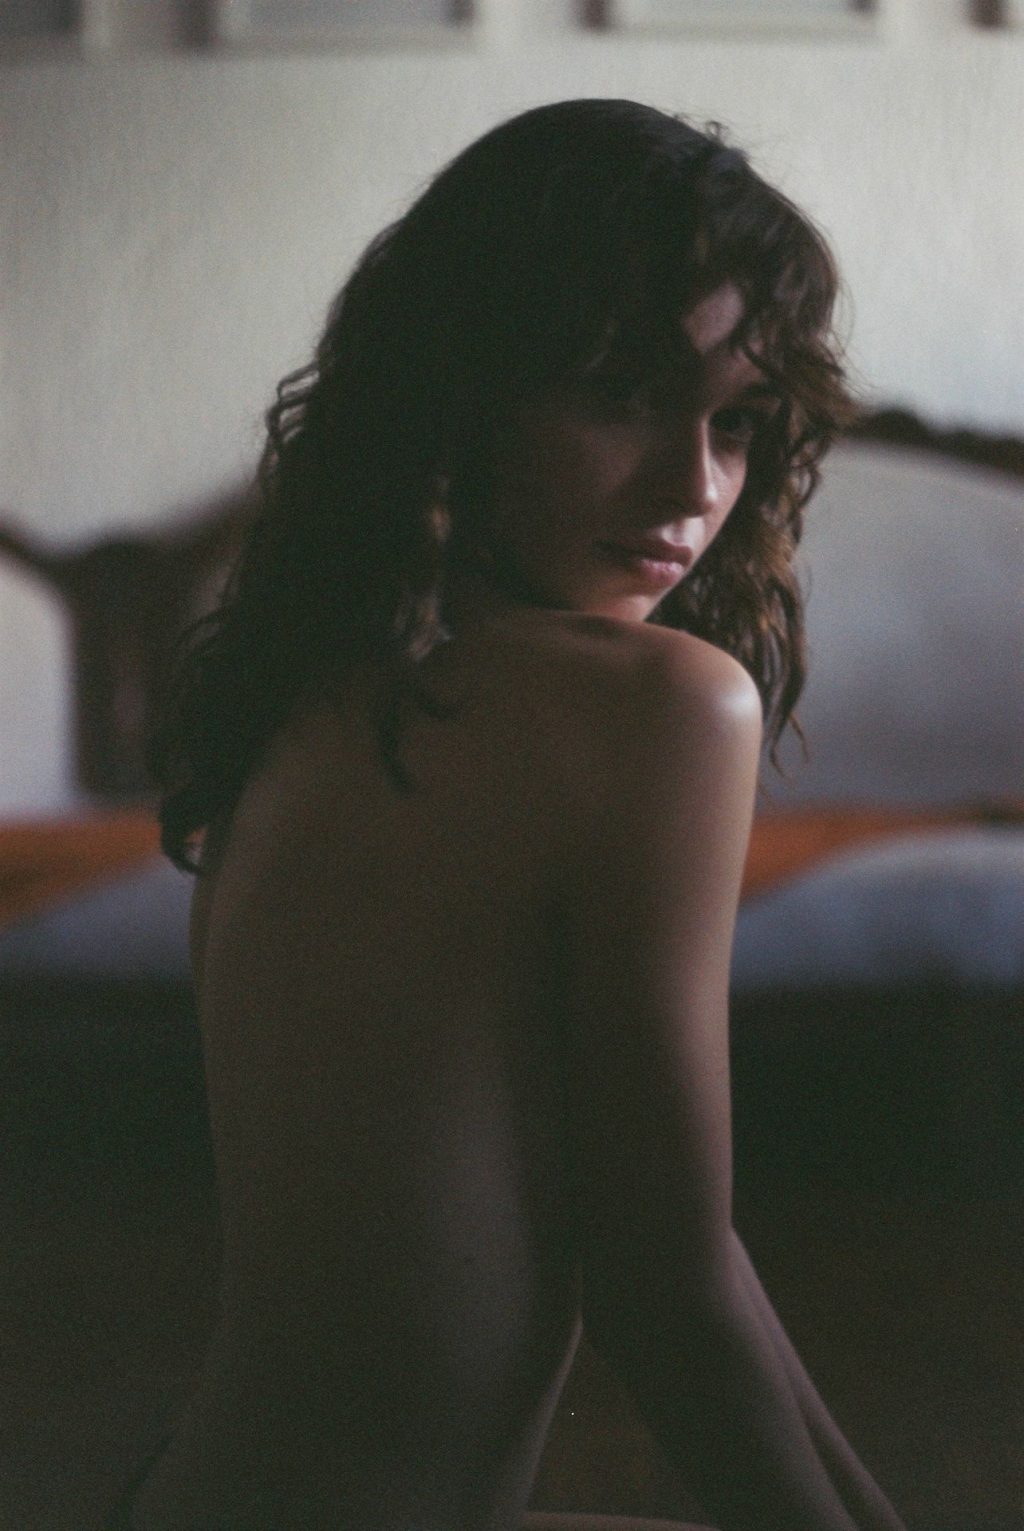 Rebecca Danon photoshoot photos nude model Instagram girl celebrity 